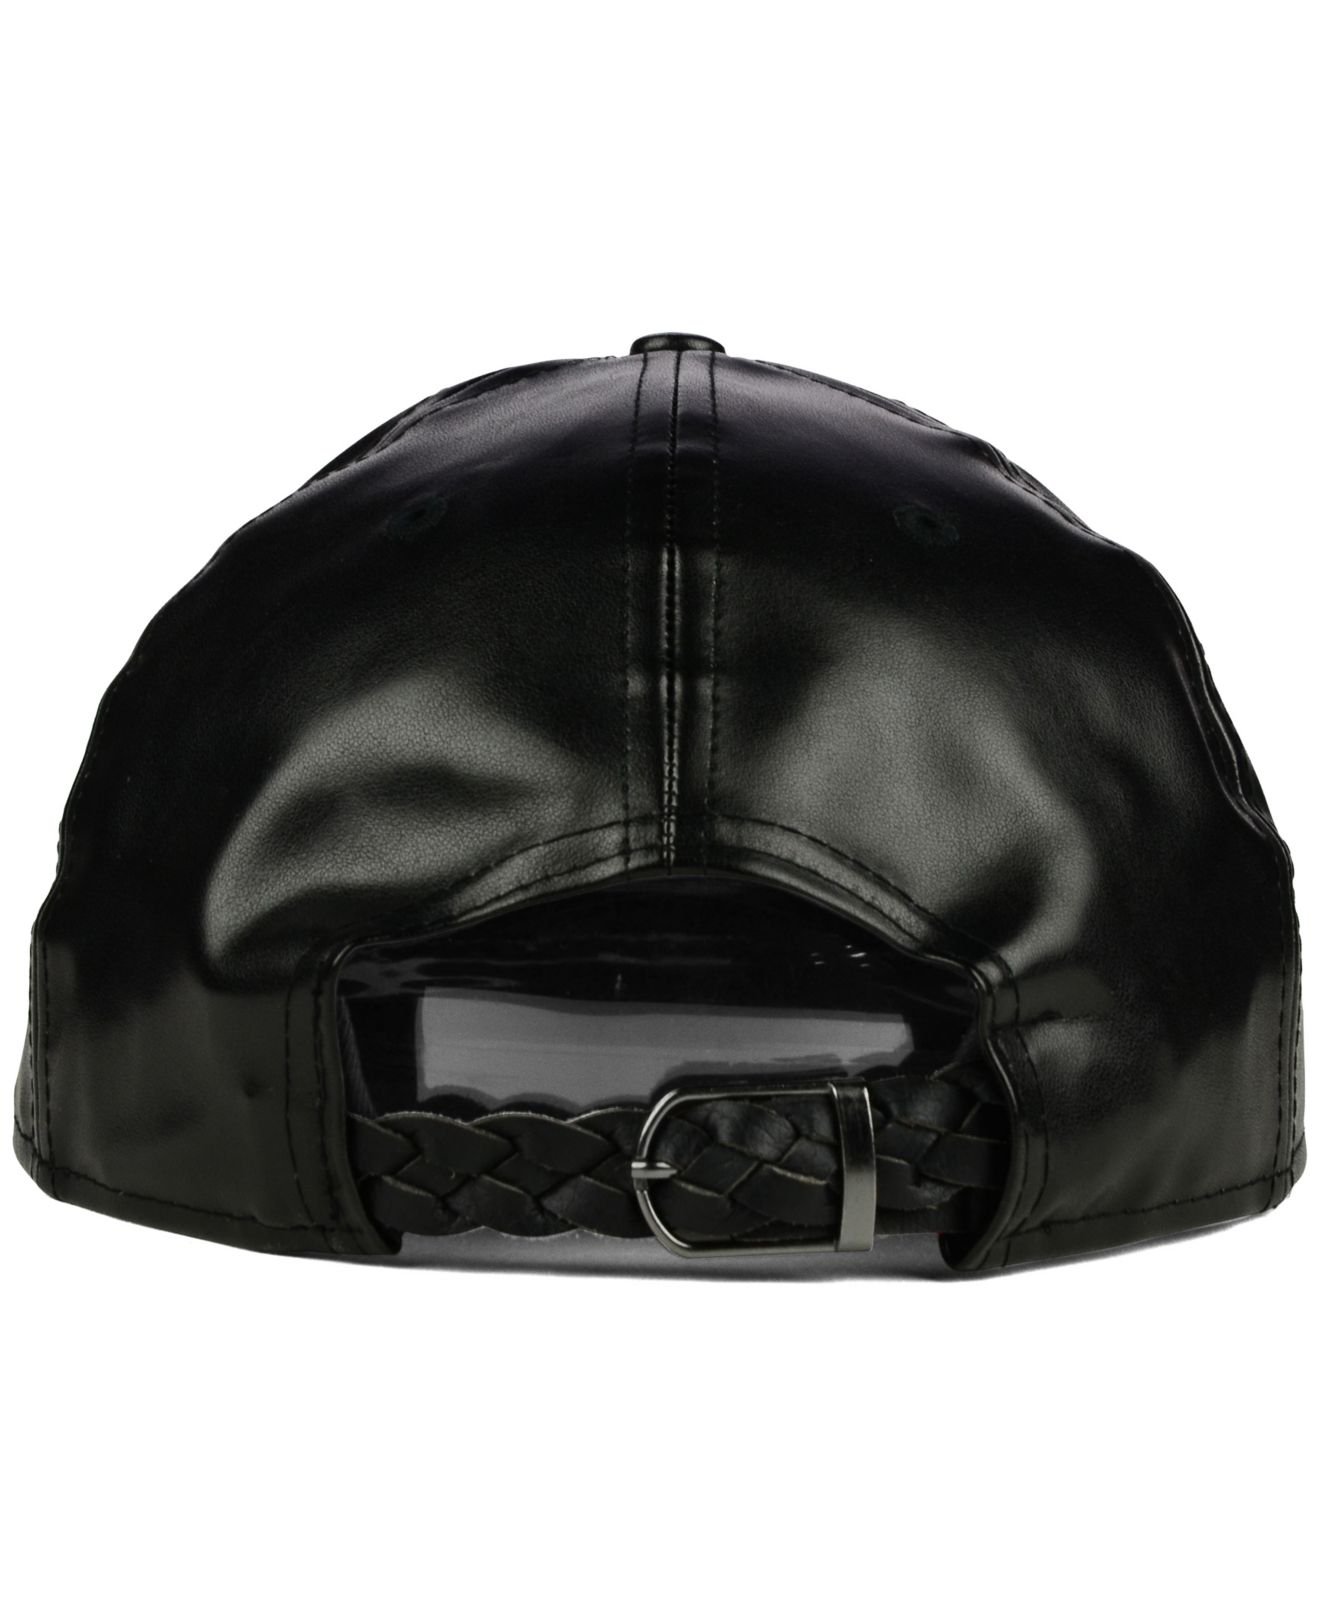 Caps leather snapback Wholesale Blank